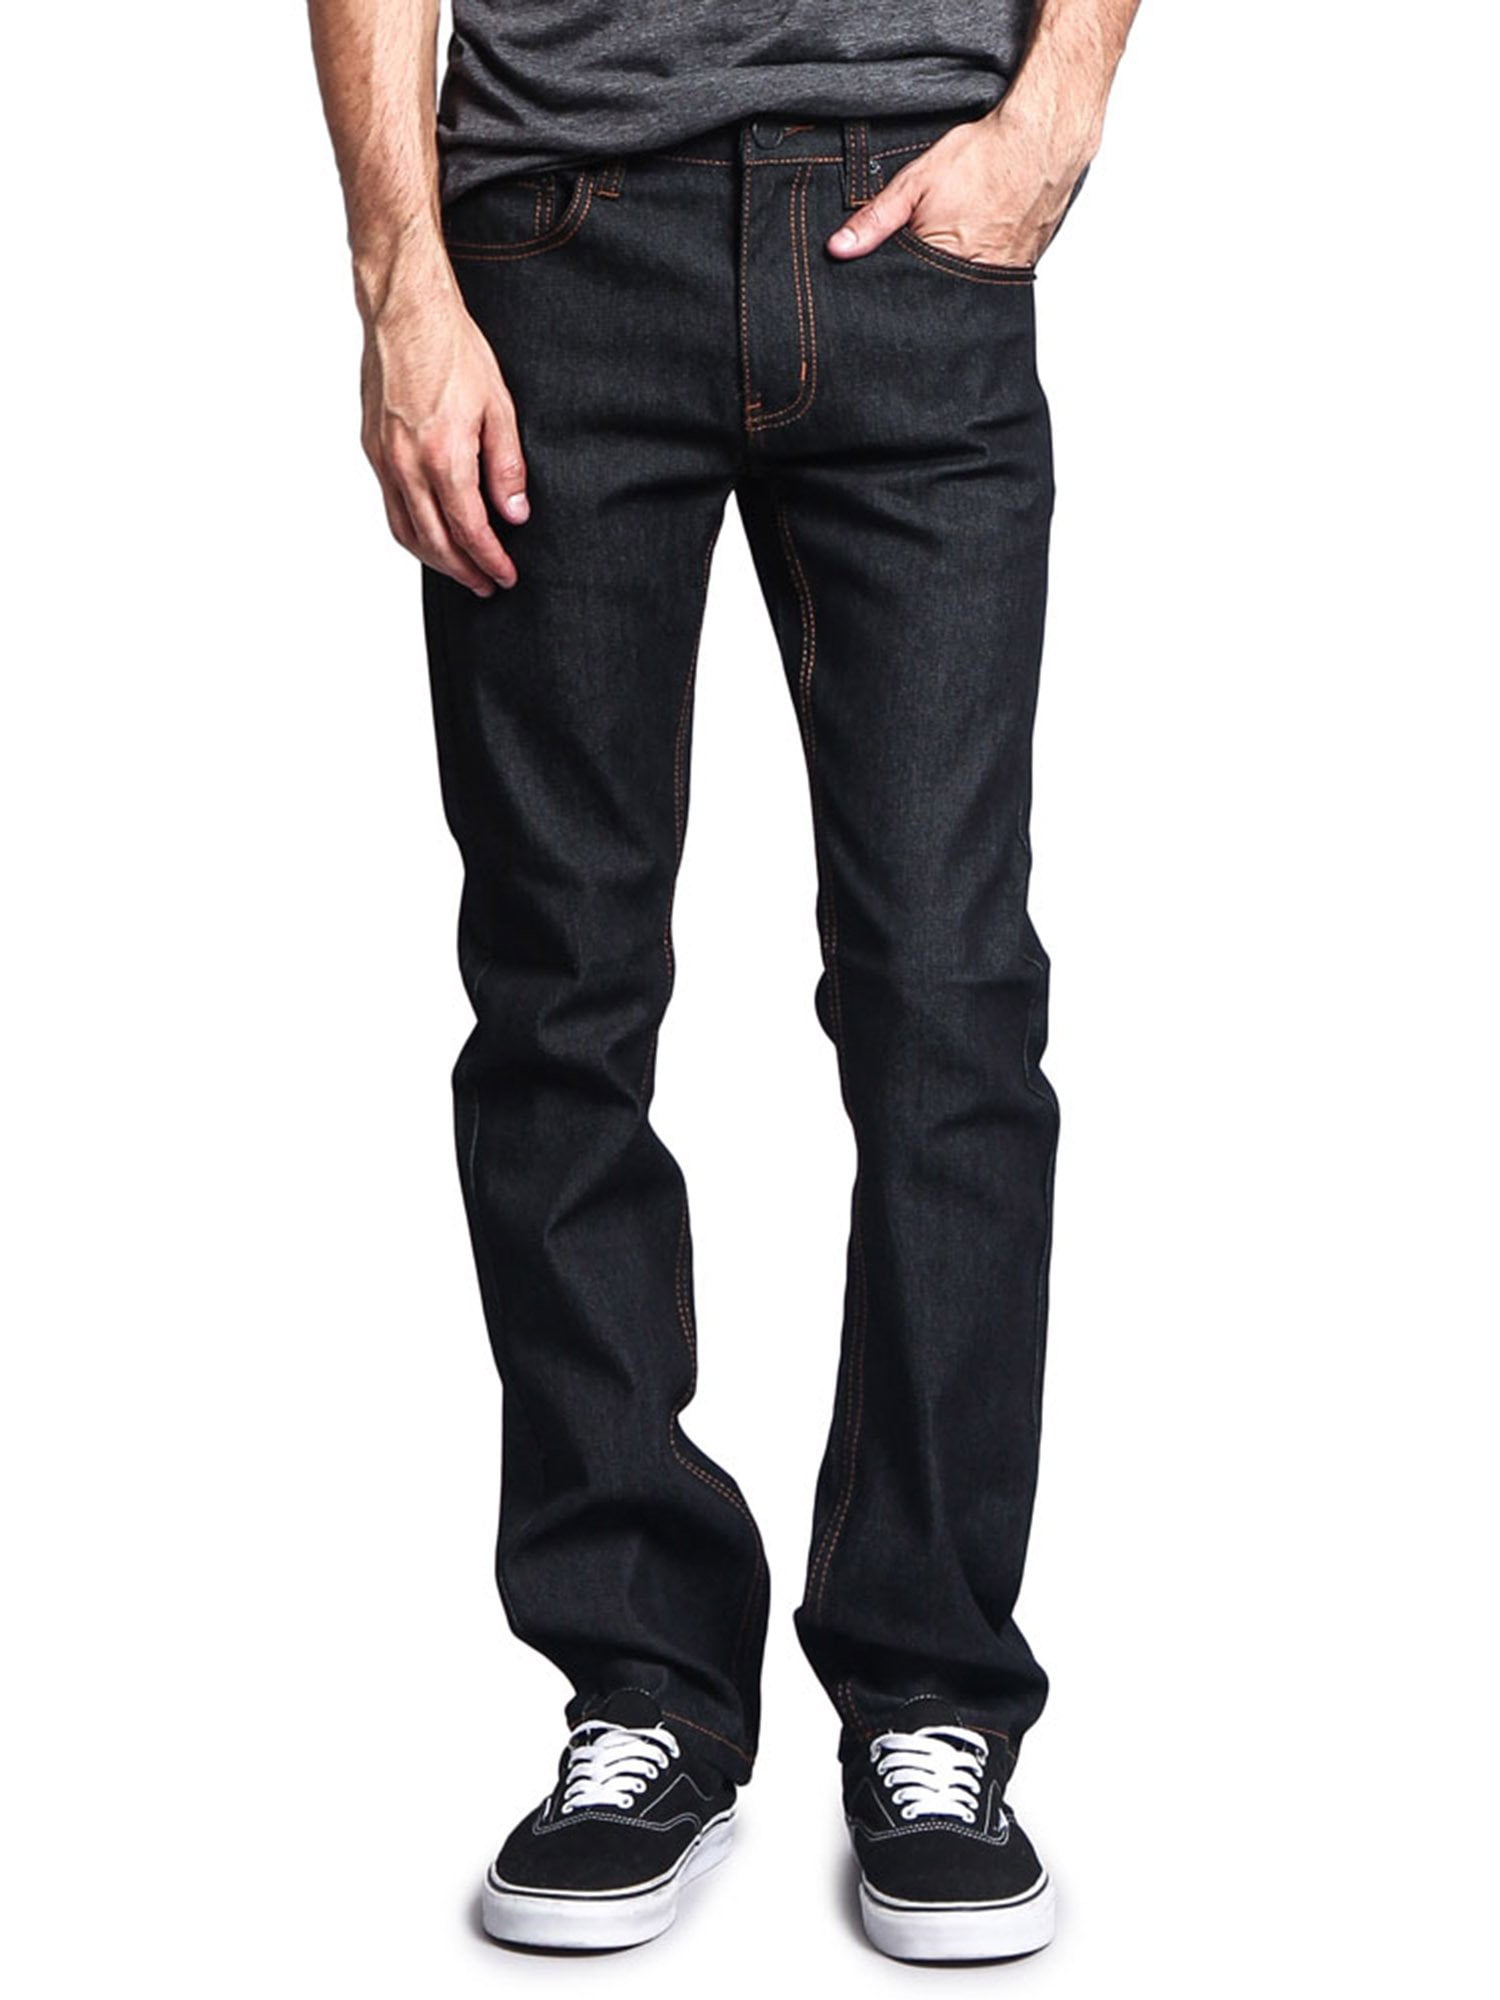 Victorious Men's Slim Fit Unwashed Raw Denim Jeans DL980 - 30/30 -